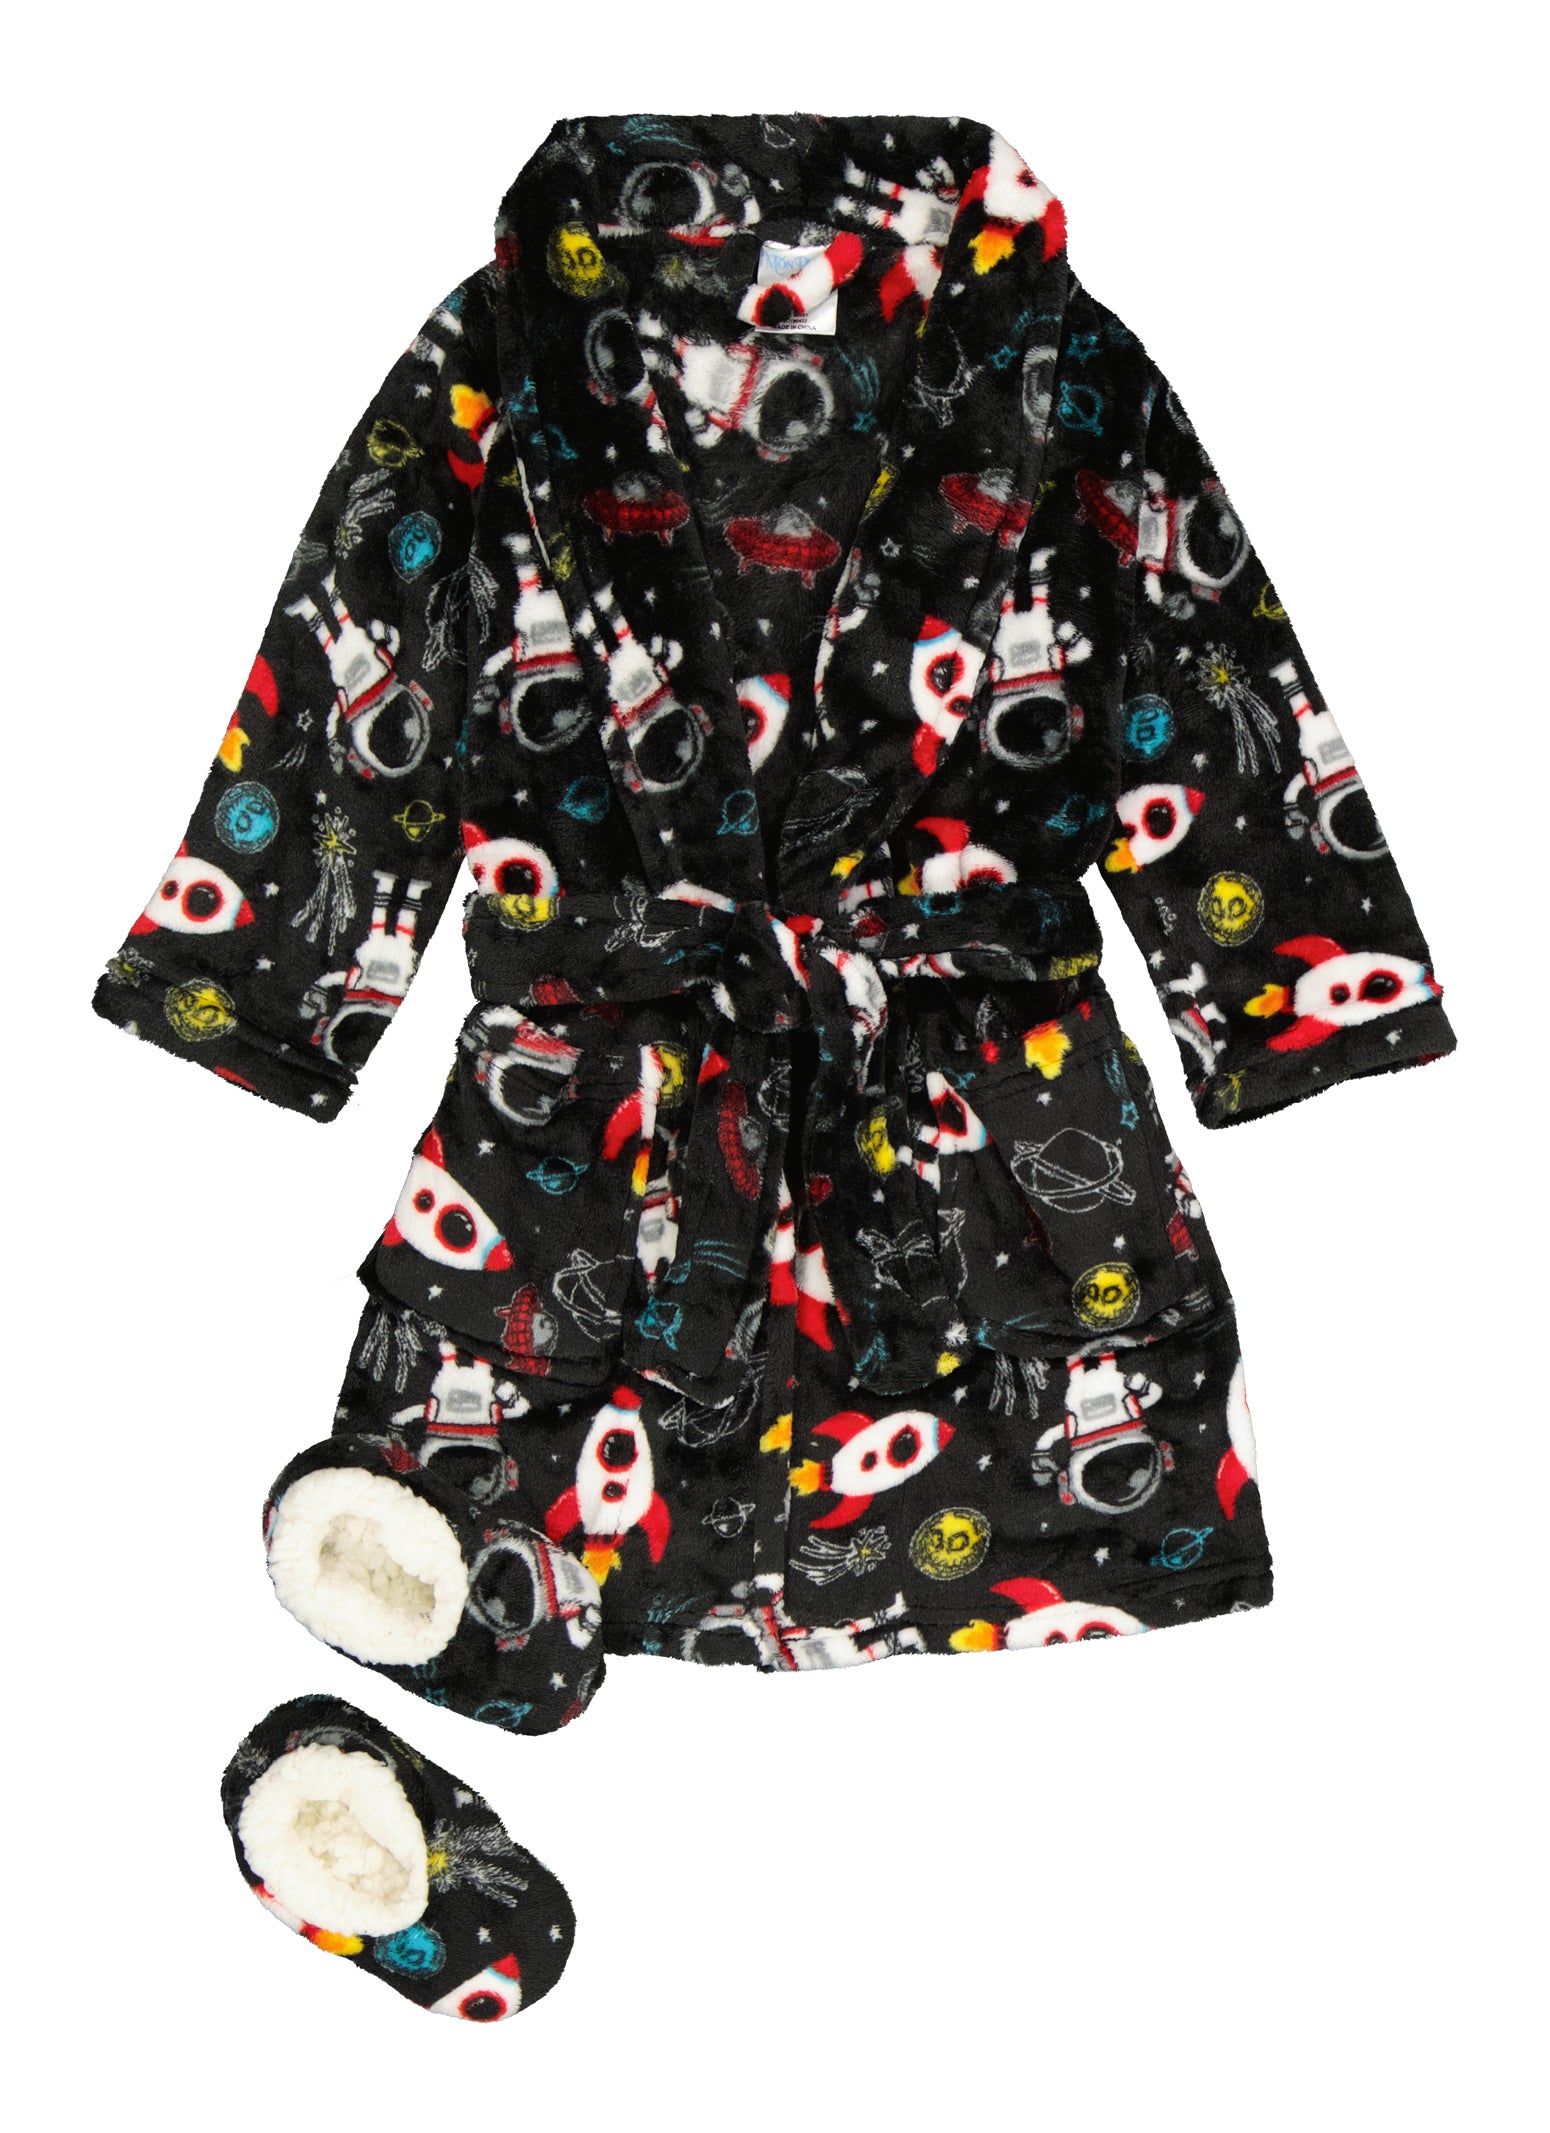 Space Black Jungle Design Silk Kimono Robe, Cashmere Dressing Gown,  Reversible, Loungewear, Bathrobes, House Coat, Bridal Robe, Gift for Her -  Etsy